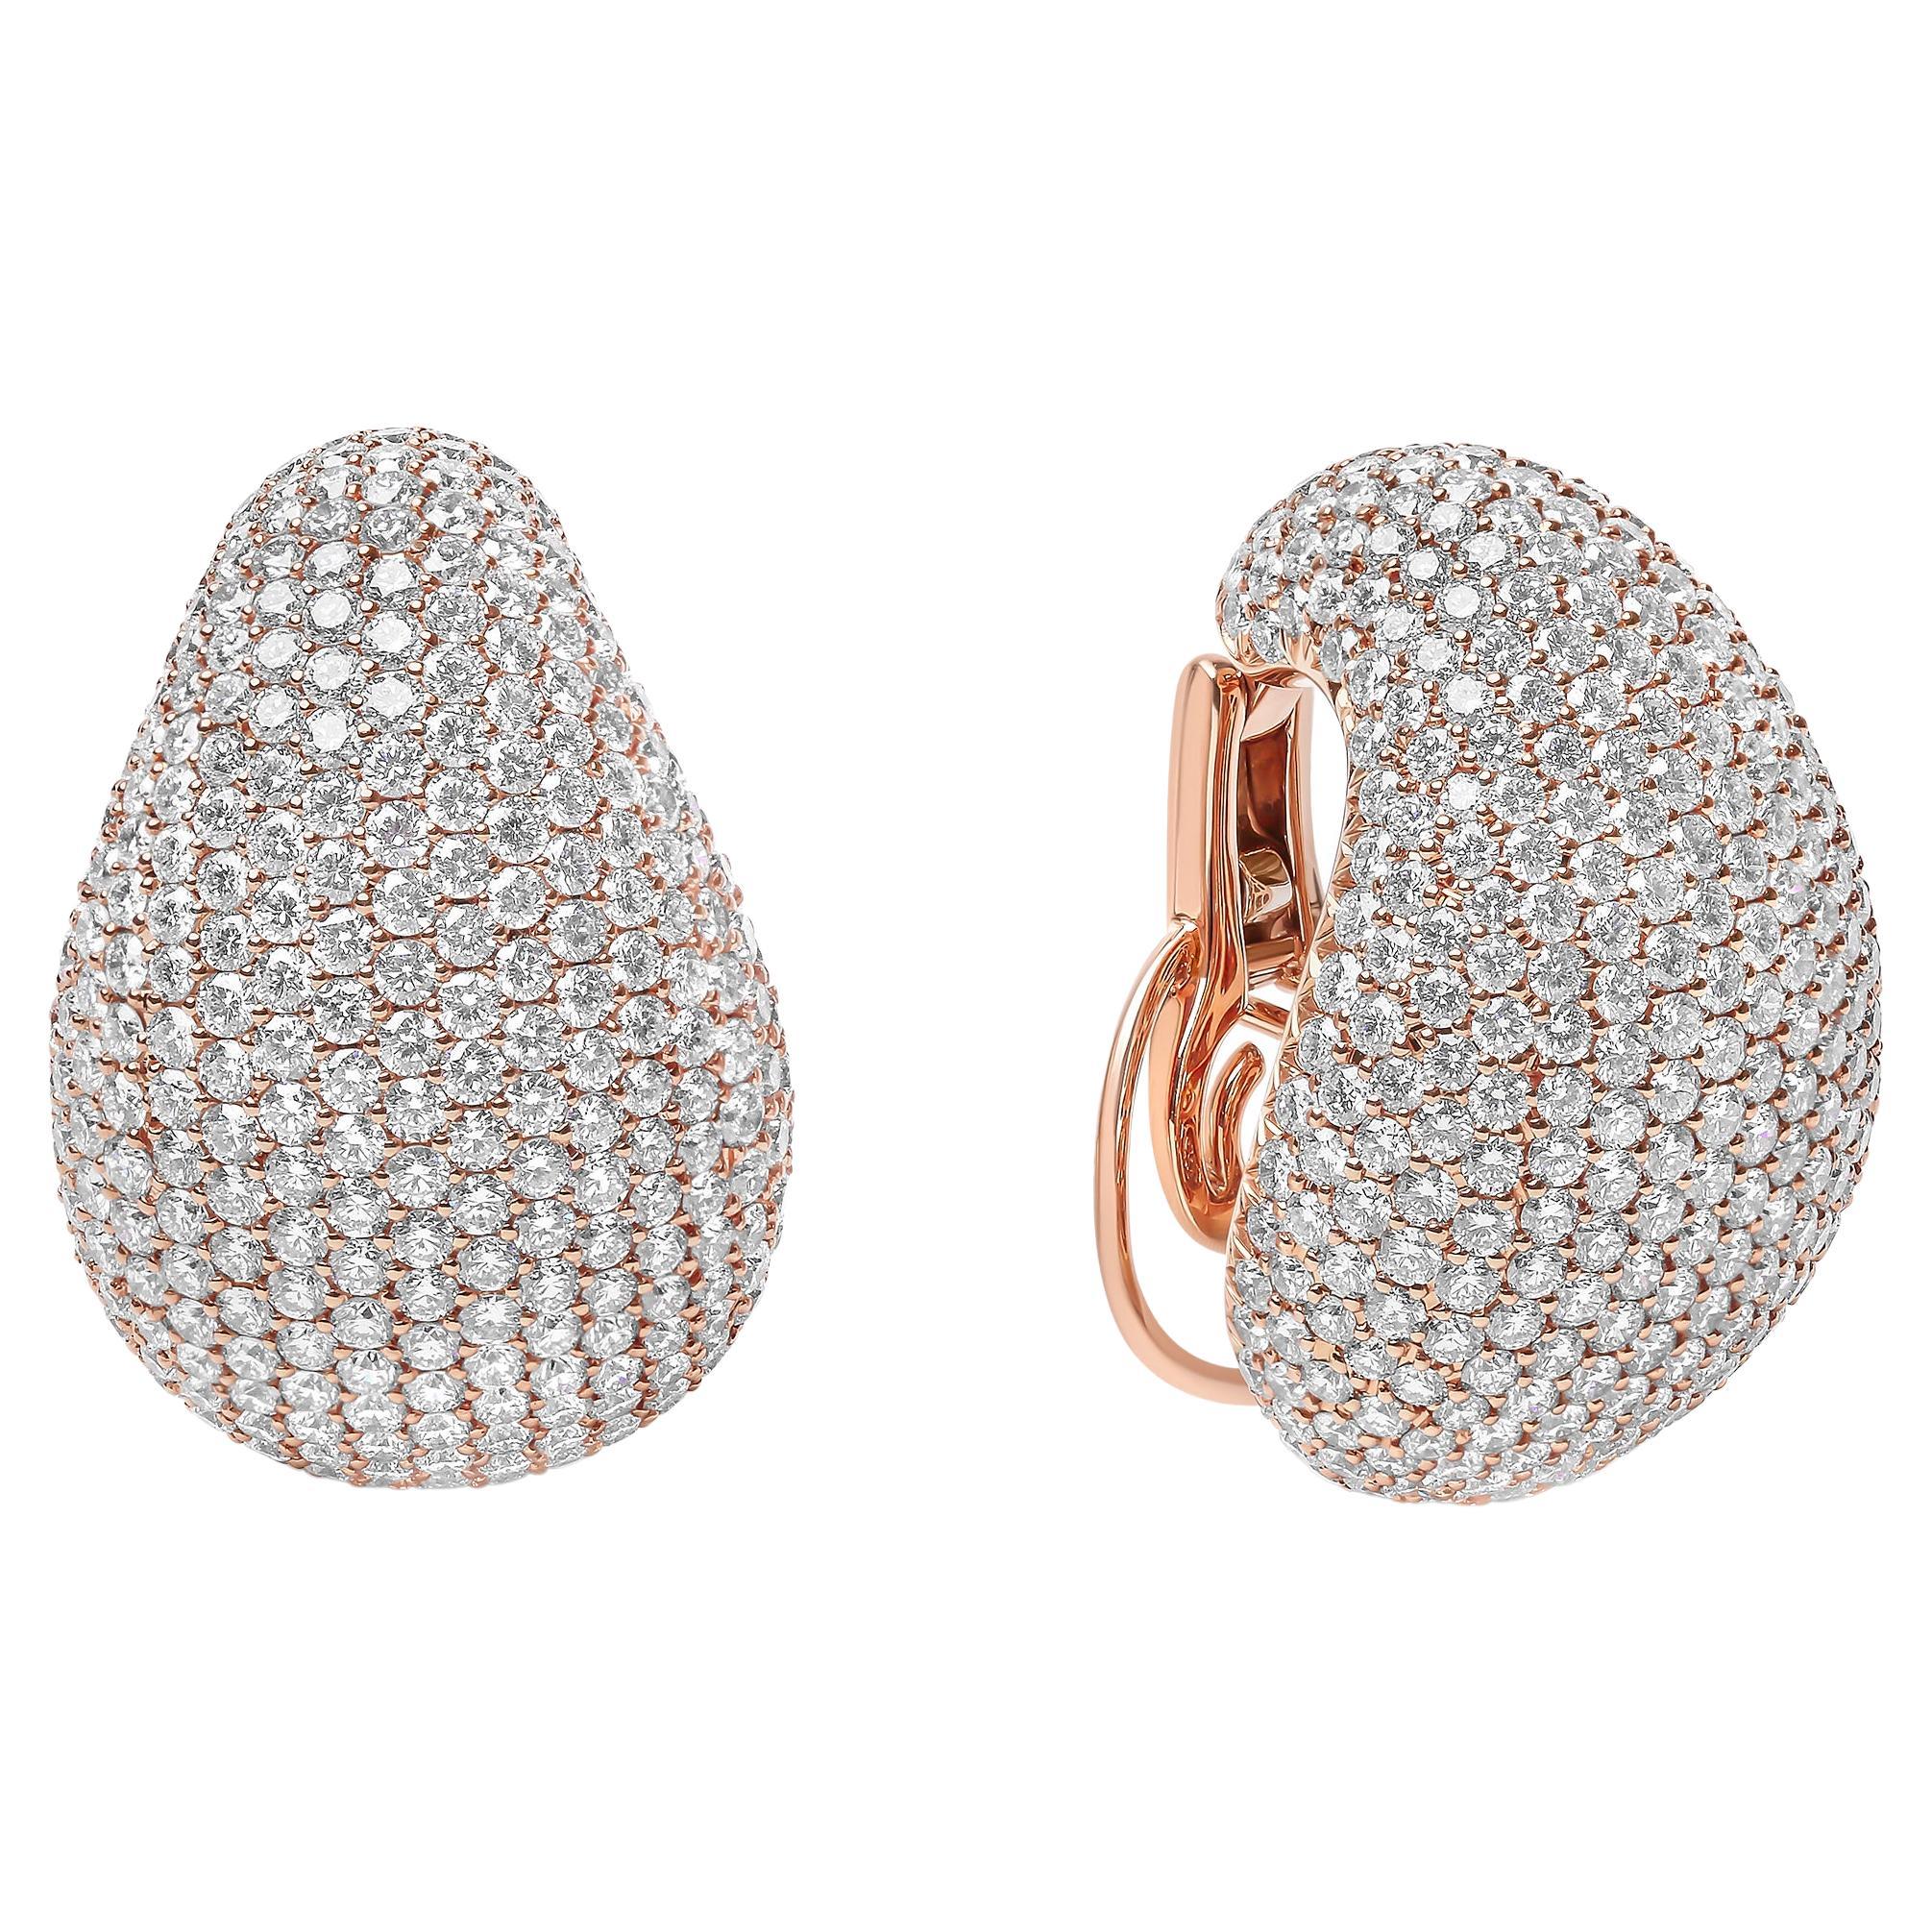 Discover 76+ 5 ct diamond earrings best - esthdonghoadian